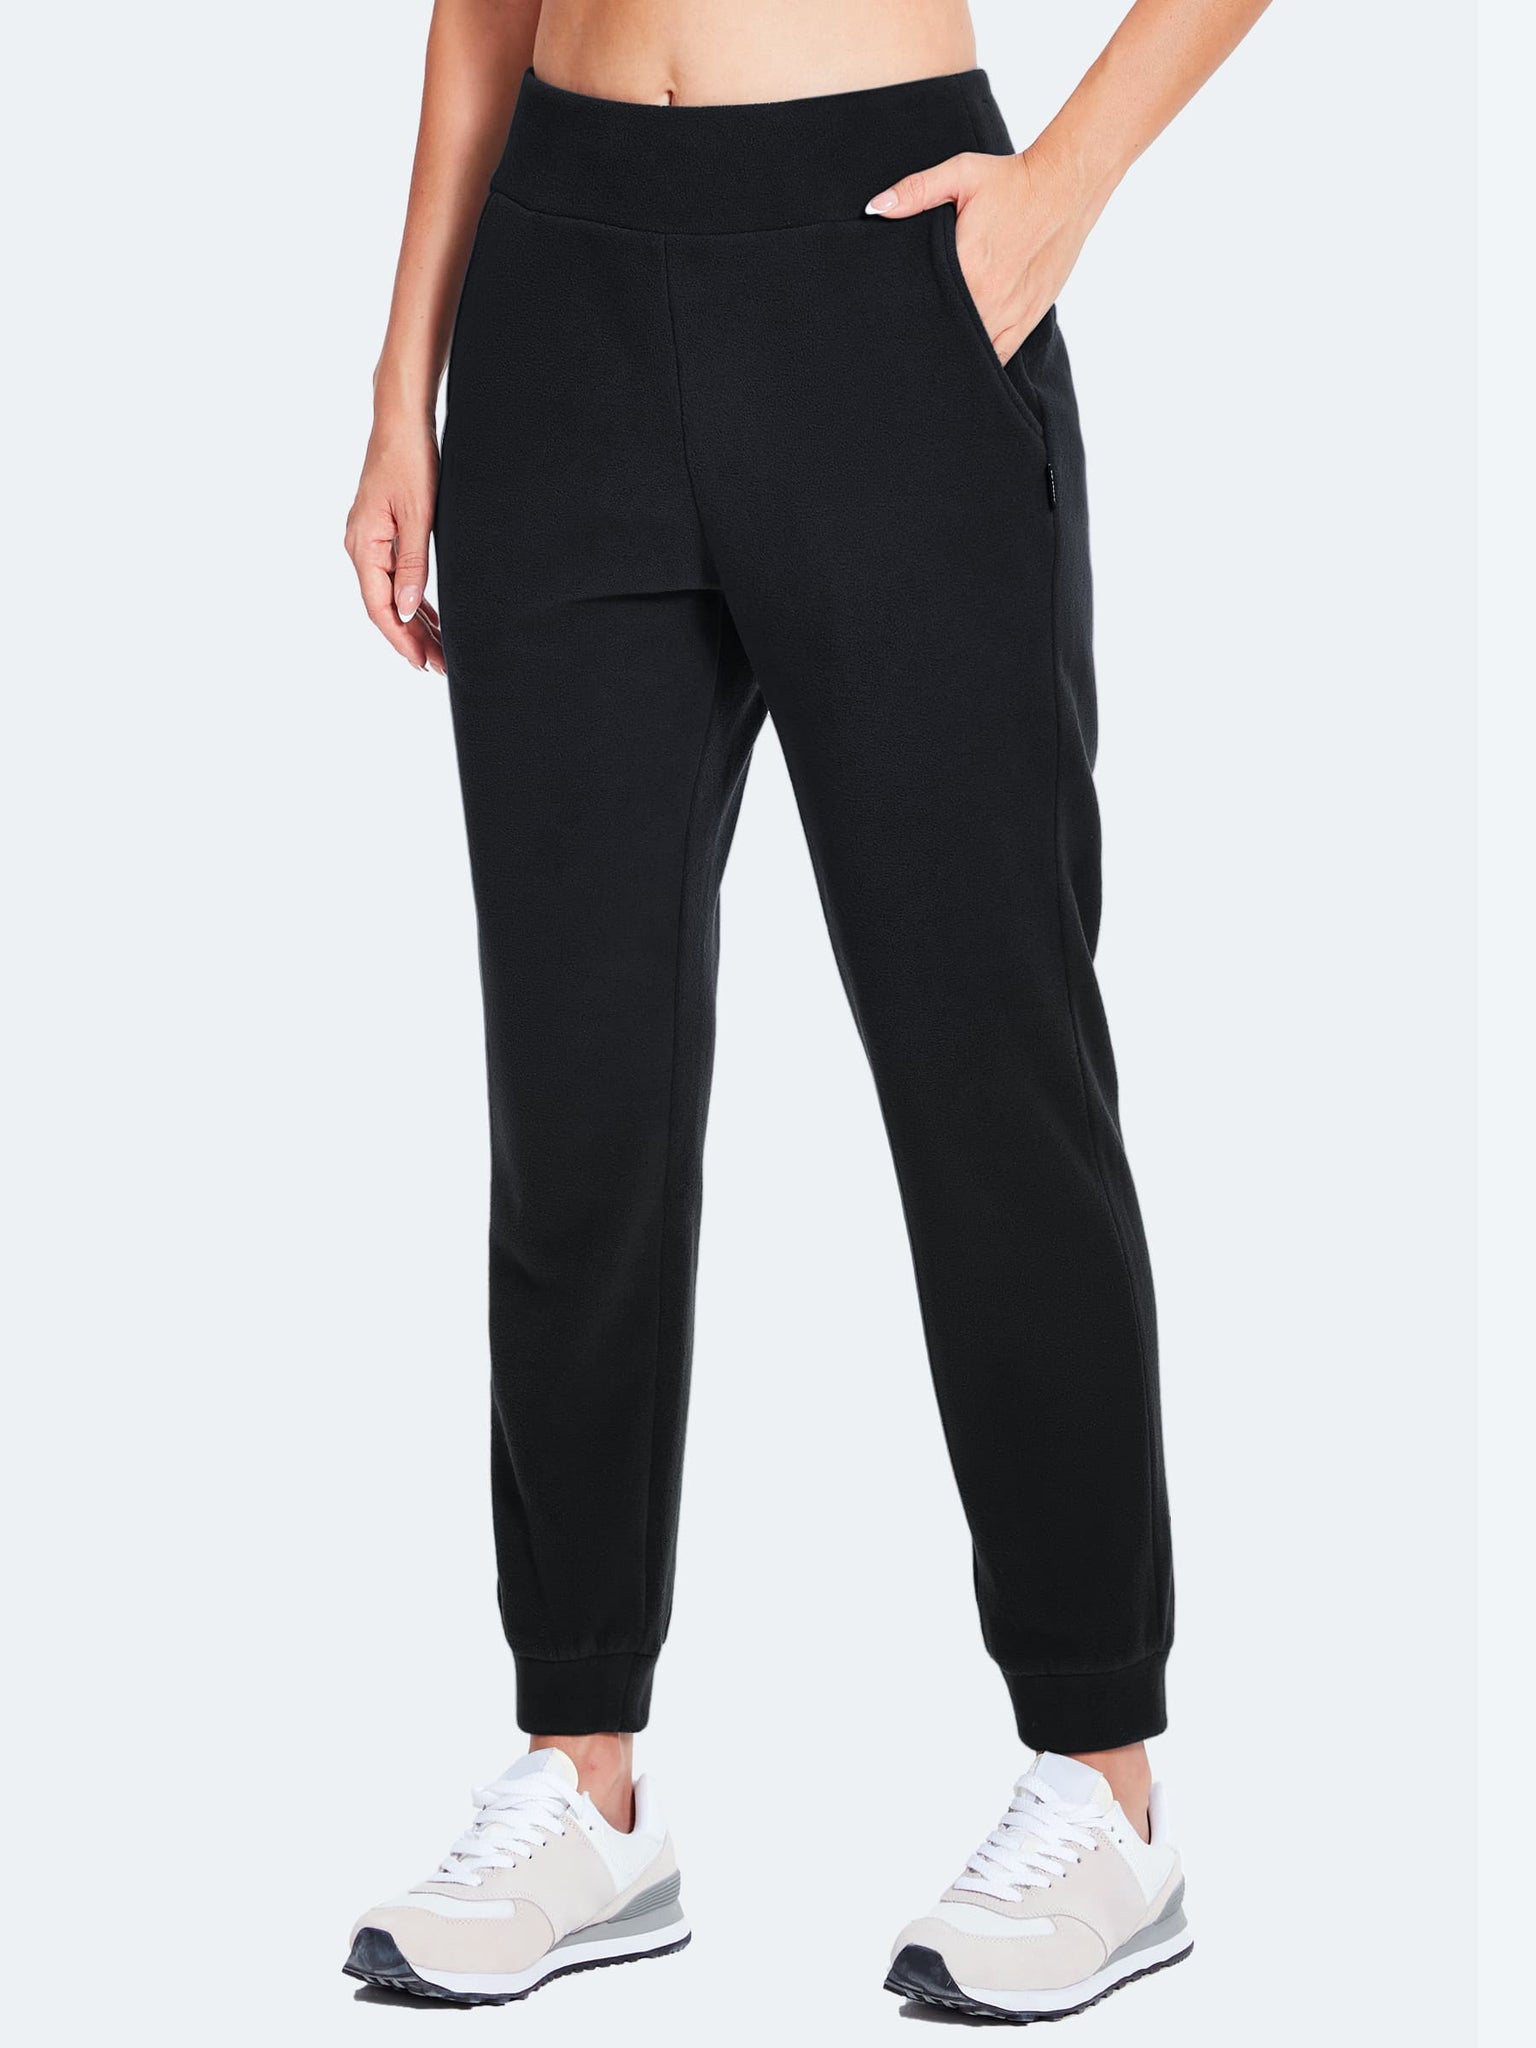 Willit Women's Yoga Dress Pants Bootcut Work Slacks Pants Stretch Office  Casual Pants Petite/Regular/Long 29/31/33, Khaki, S price in Saudi Arabia,  Saudi Arabia